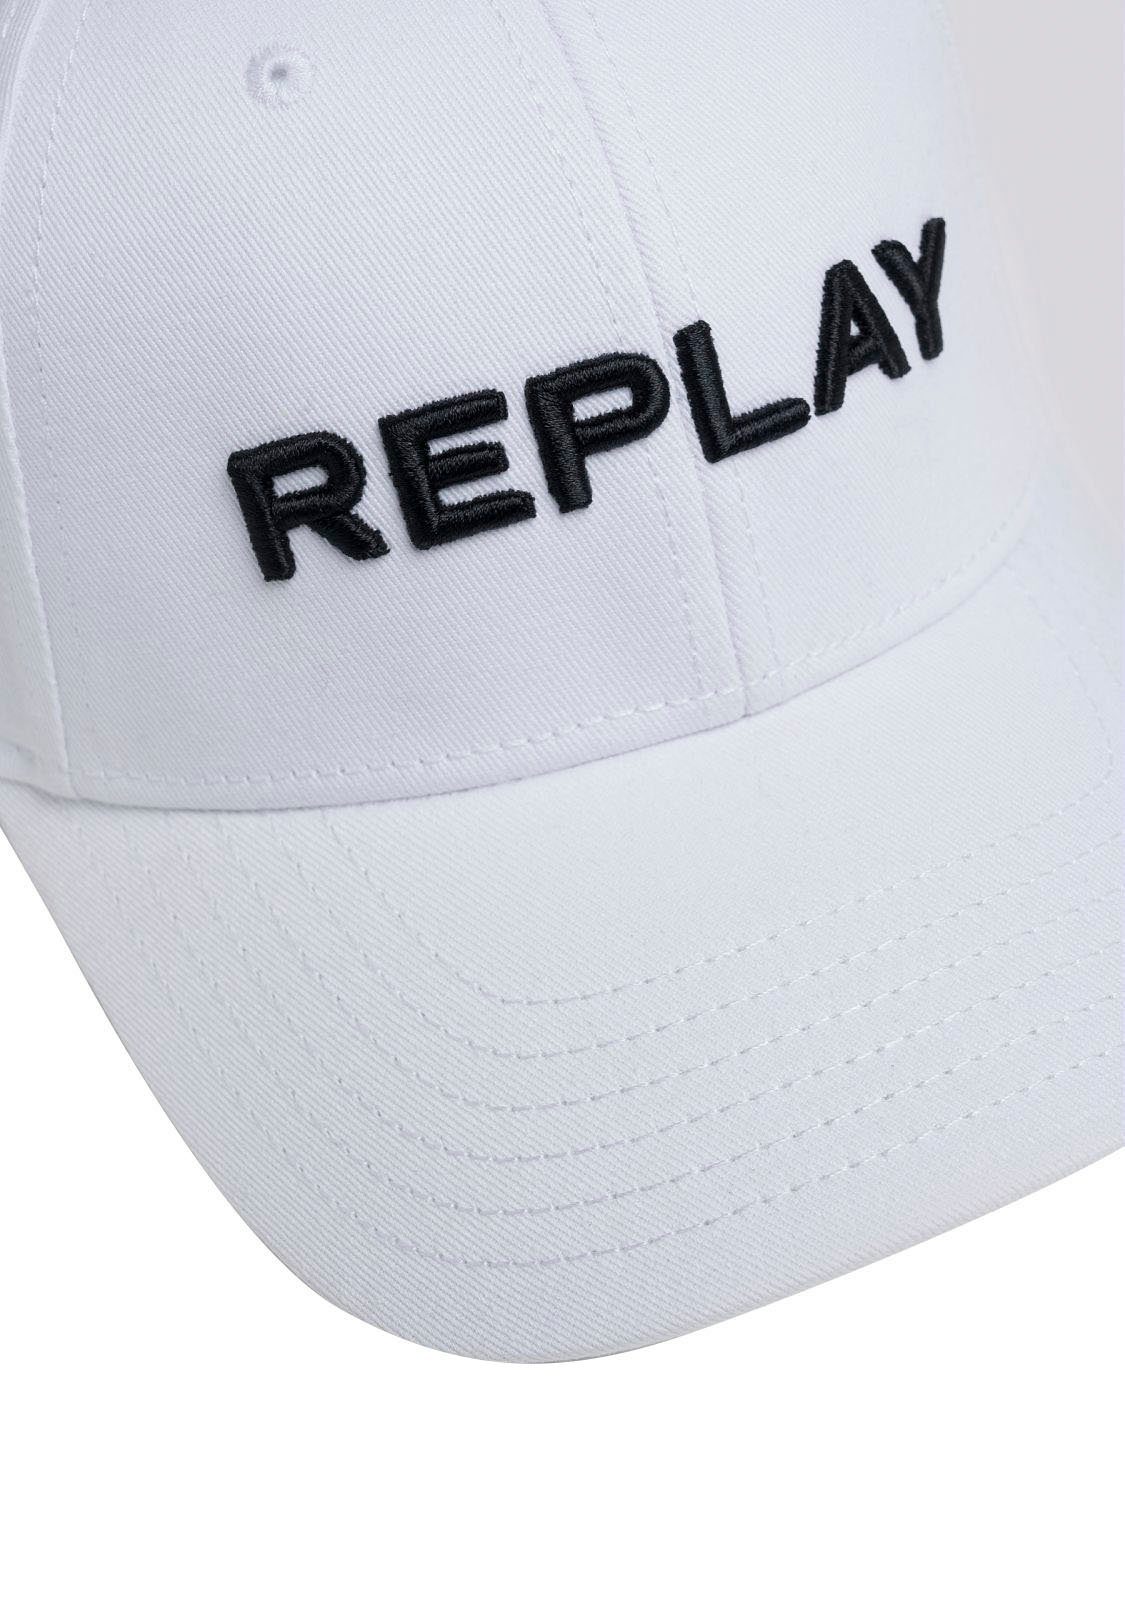 NATURALE Logo-Stickerei whit Replay COMPONENTE Baseball optical Cap mit